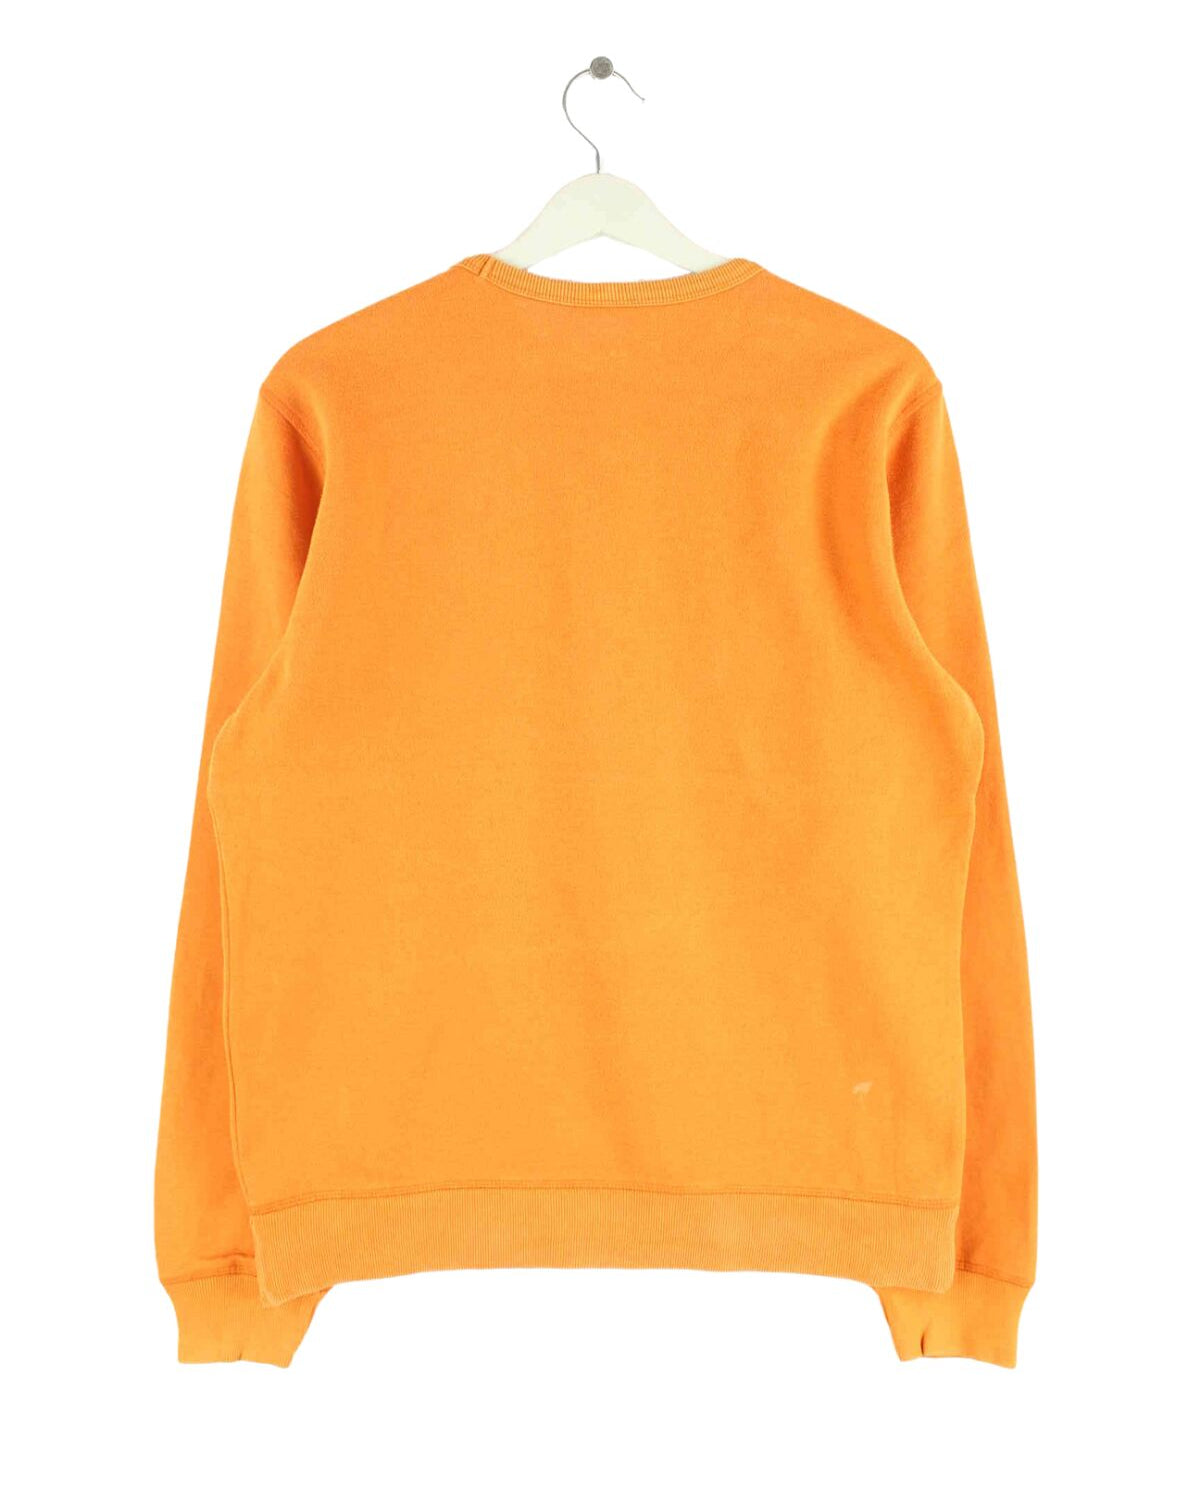 Champion Embroidered Logo Sweater Orange S (back image)